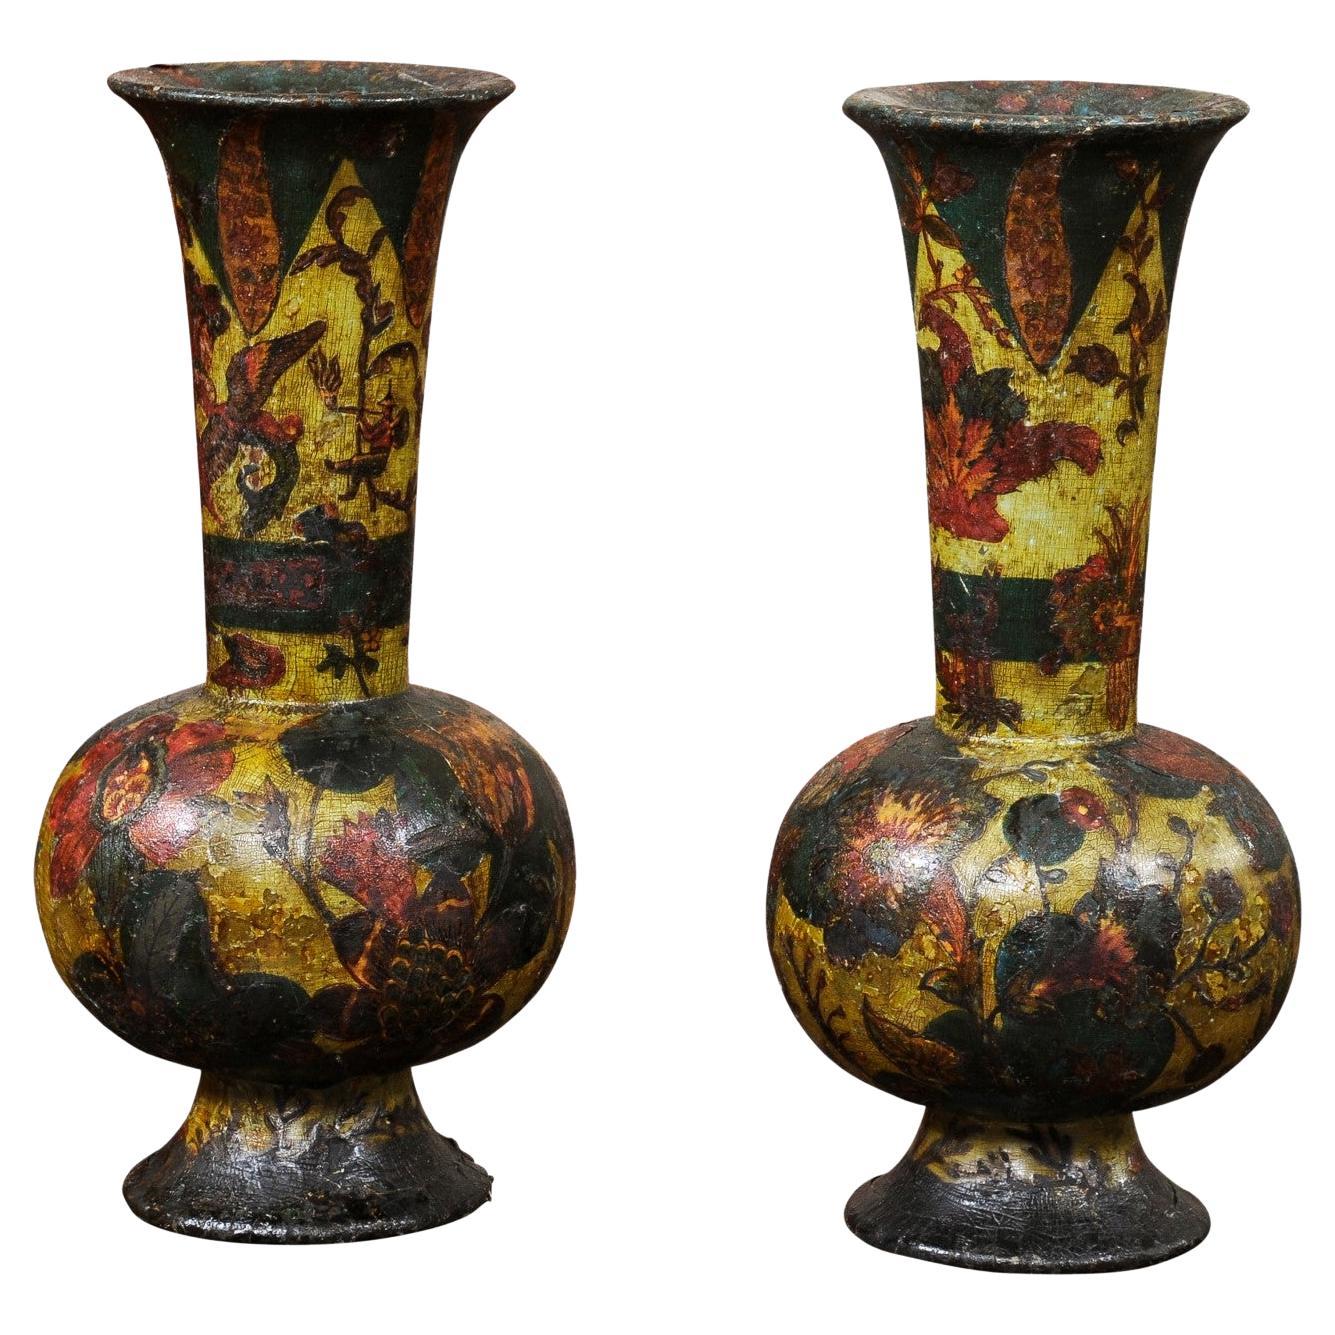  Pair of Italian Decoupage Wood Vases, 19th Century For Sale